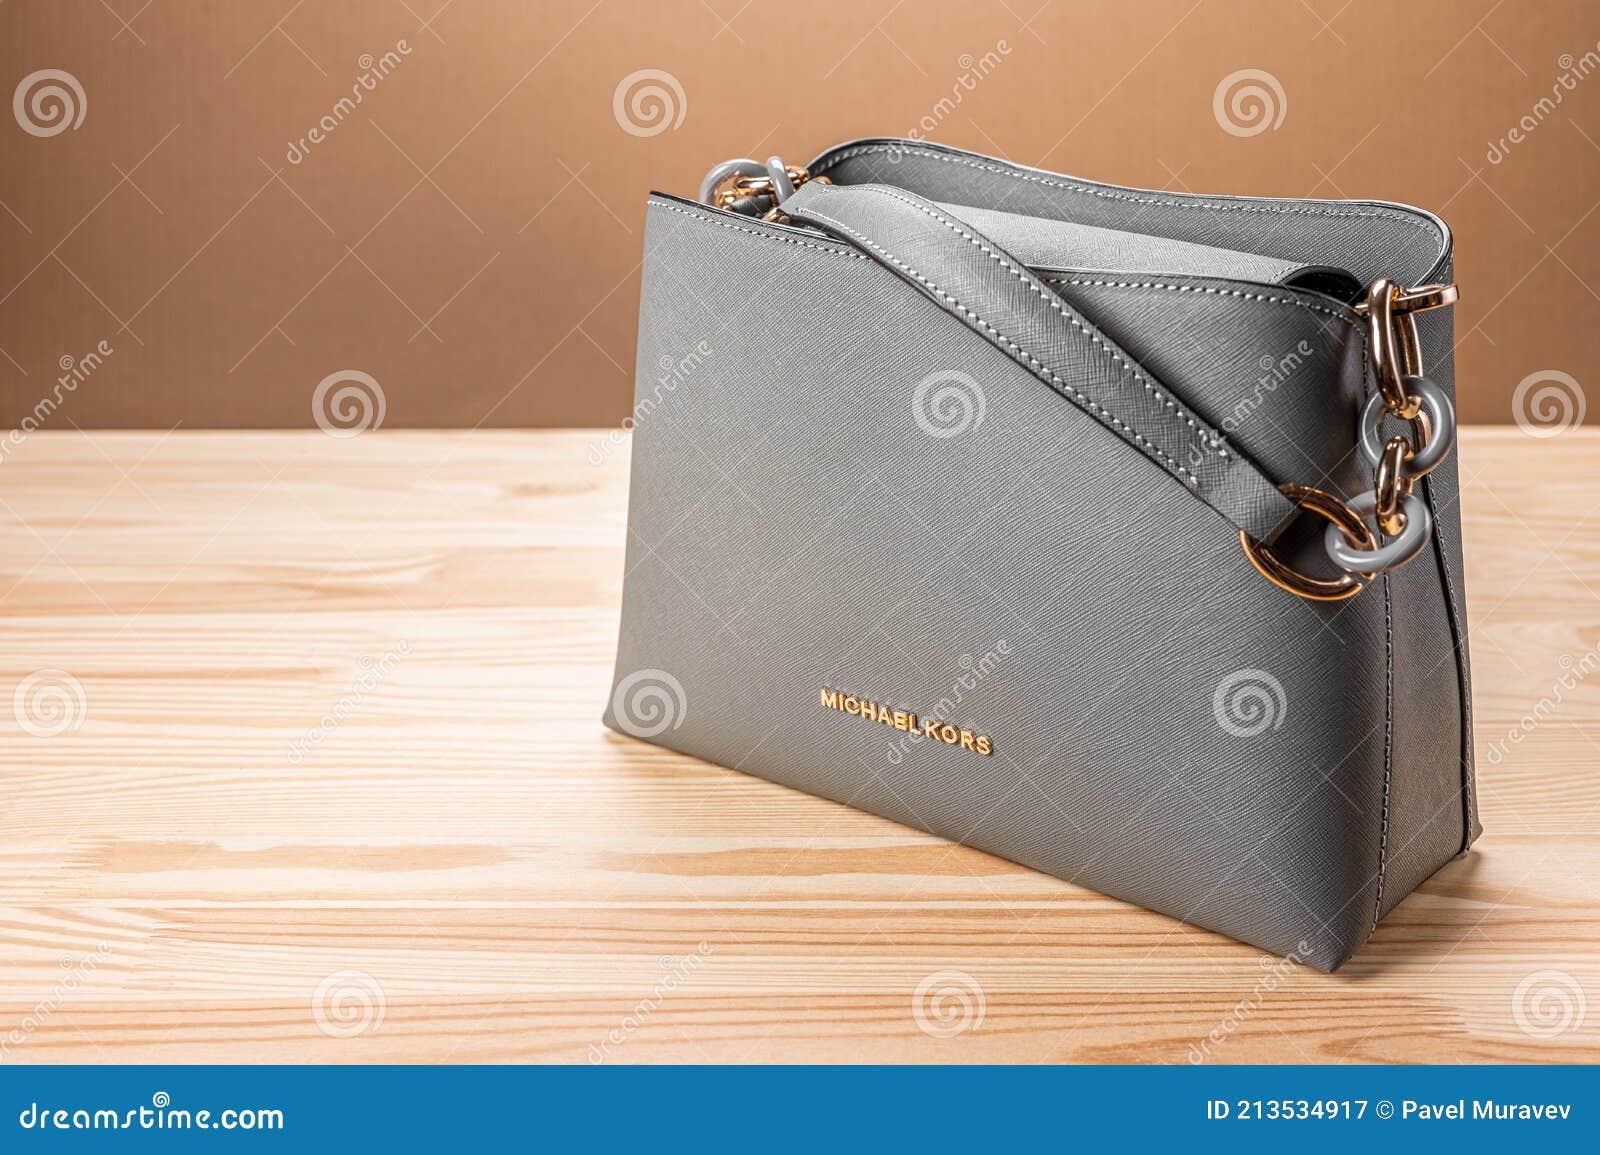 Michael Kors Handbags / Purses: sale up to −78% | Stylight